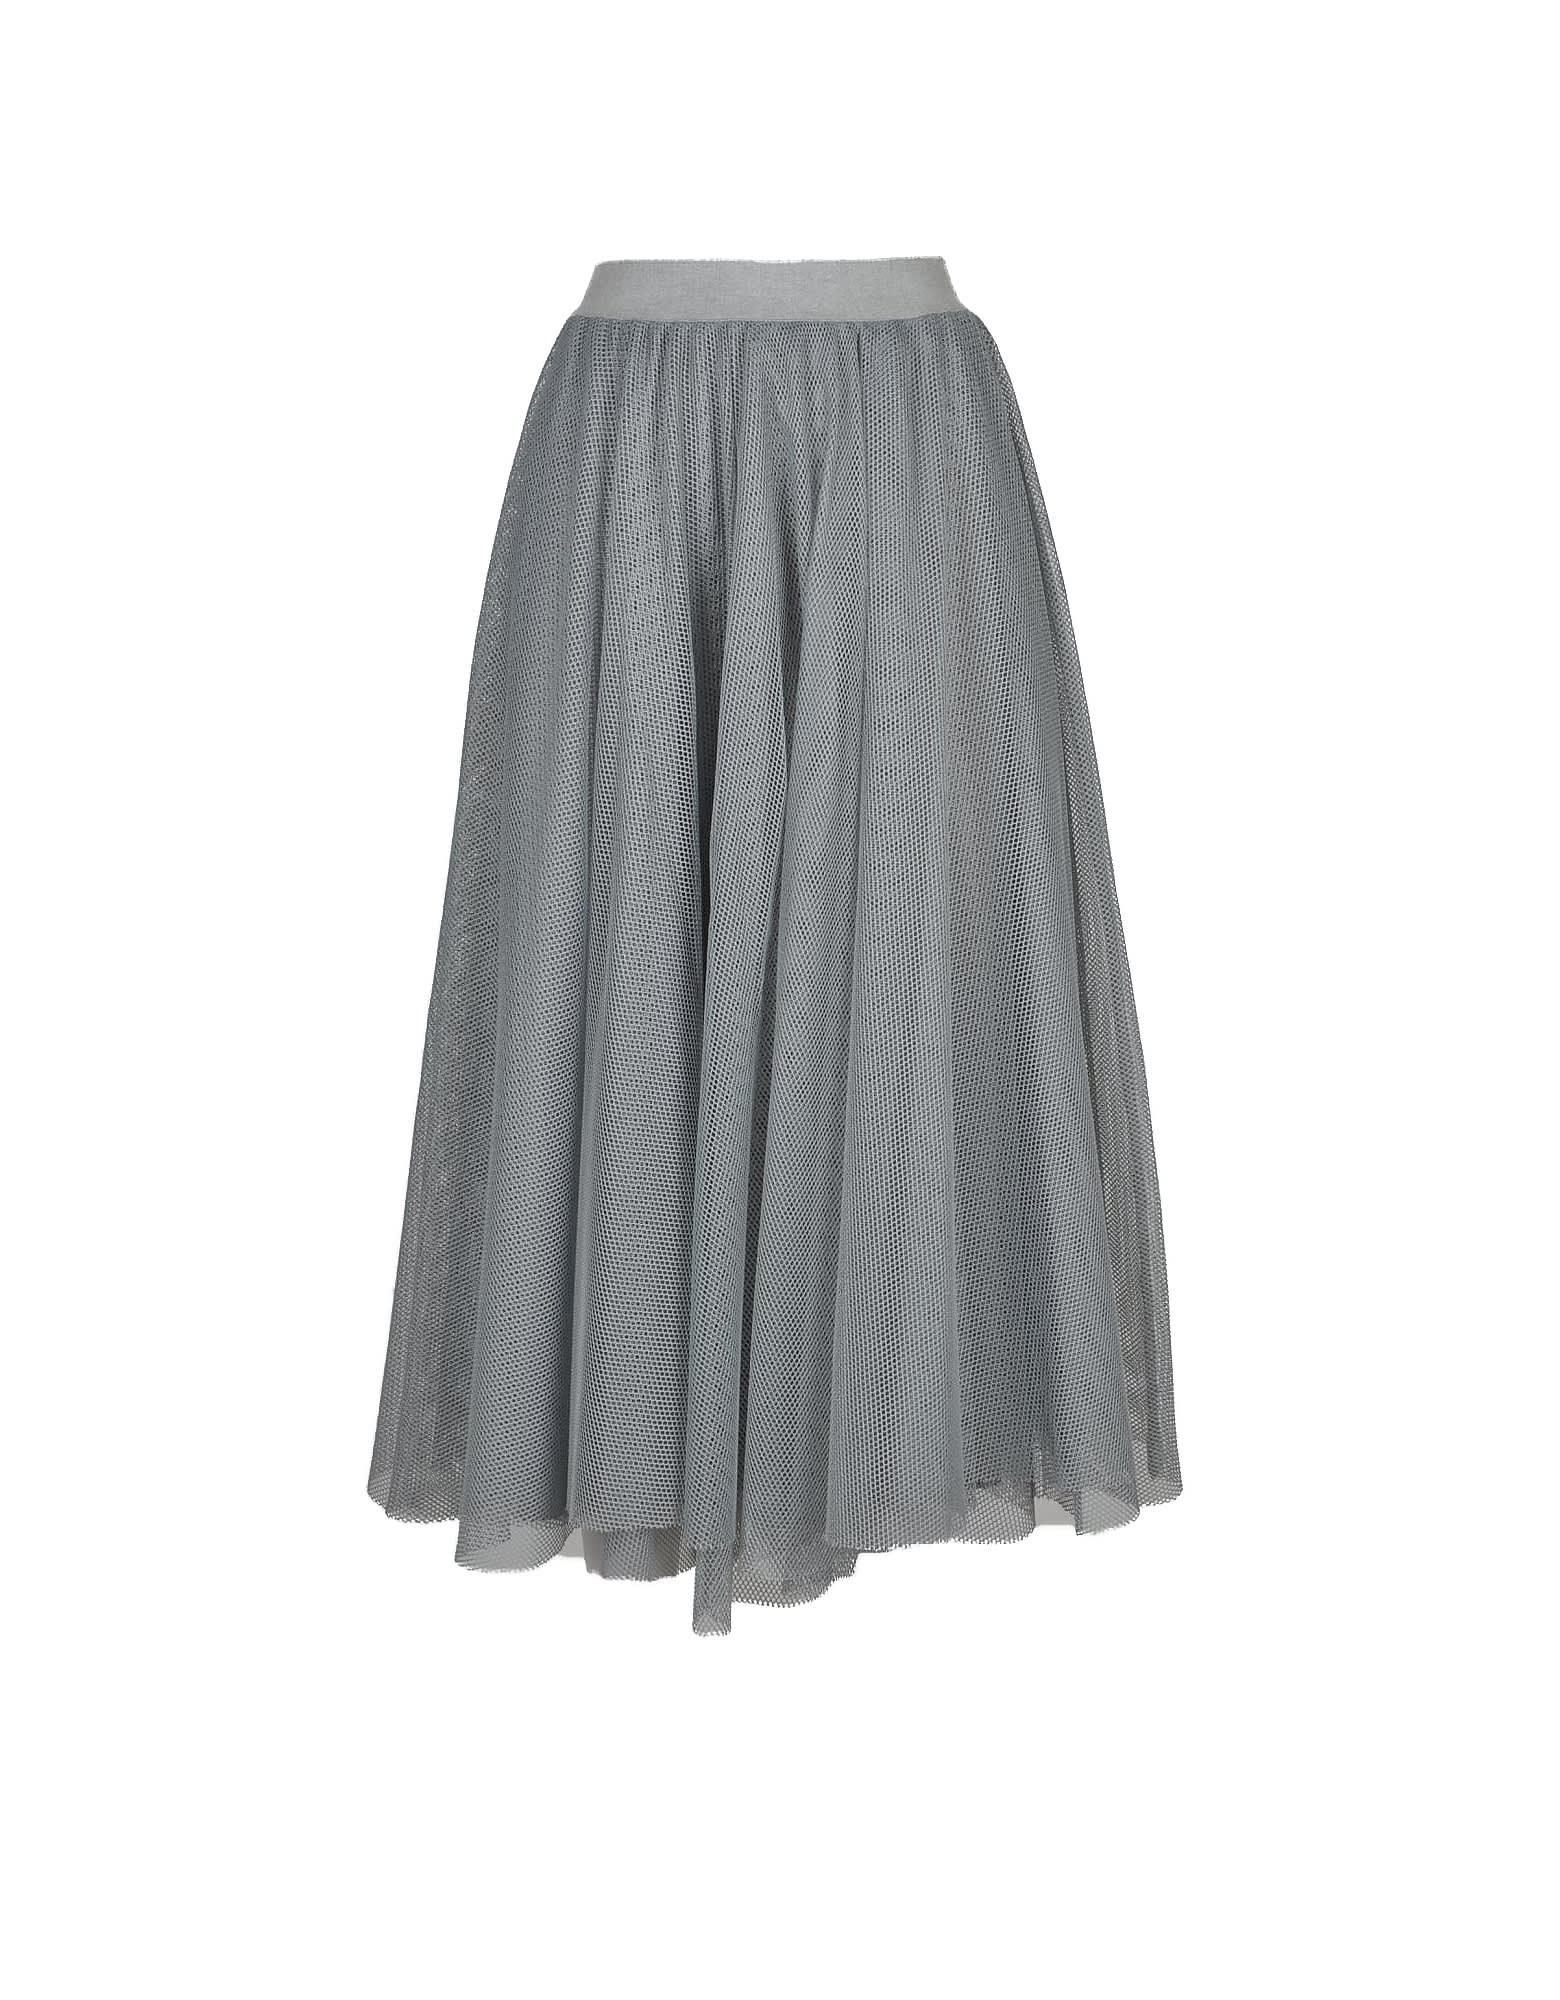 Fabiana Filippi Womens Gray Skirt